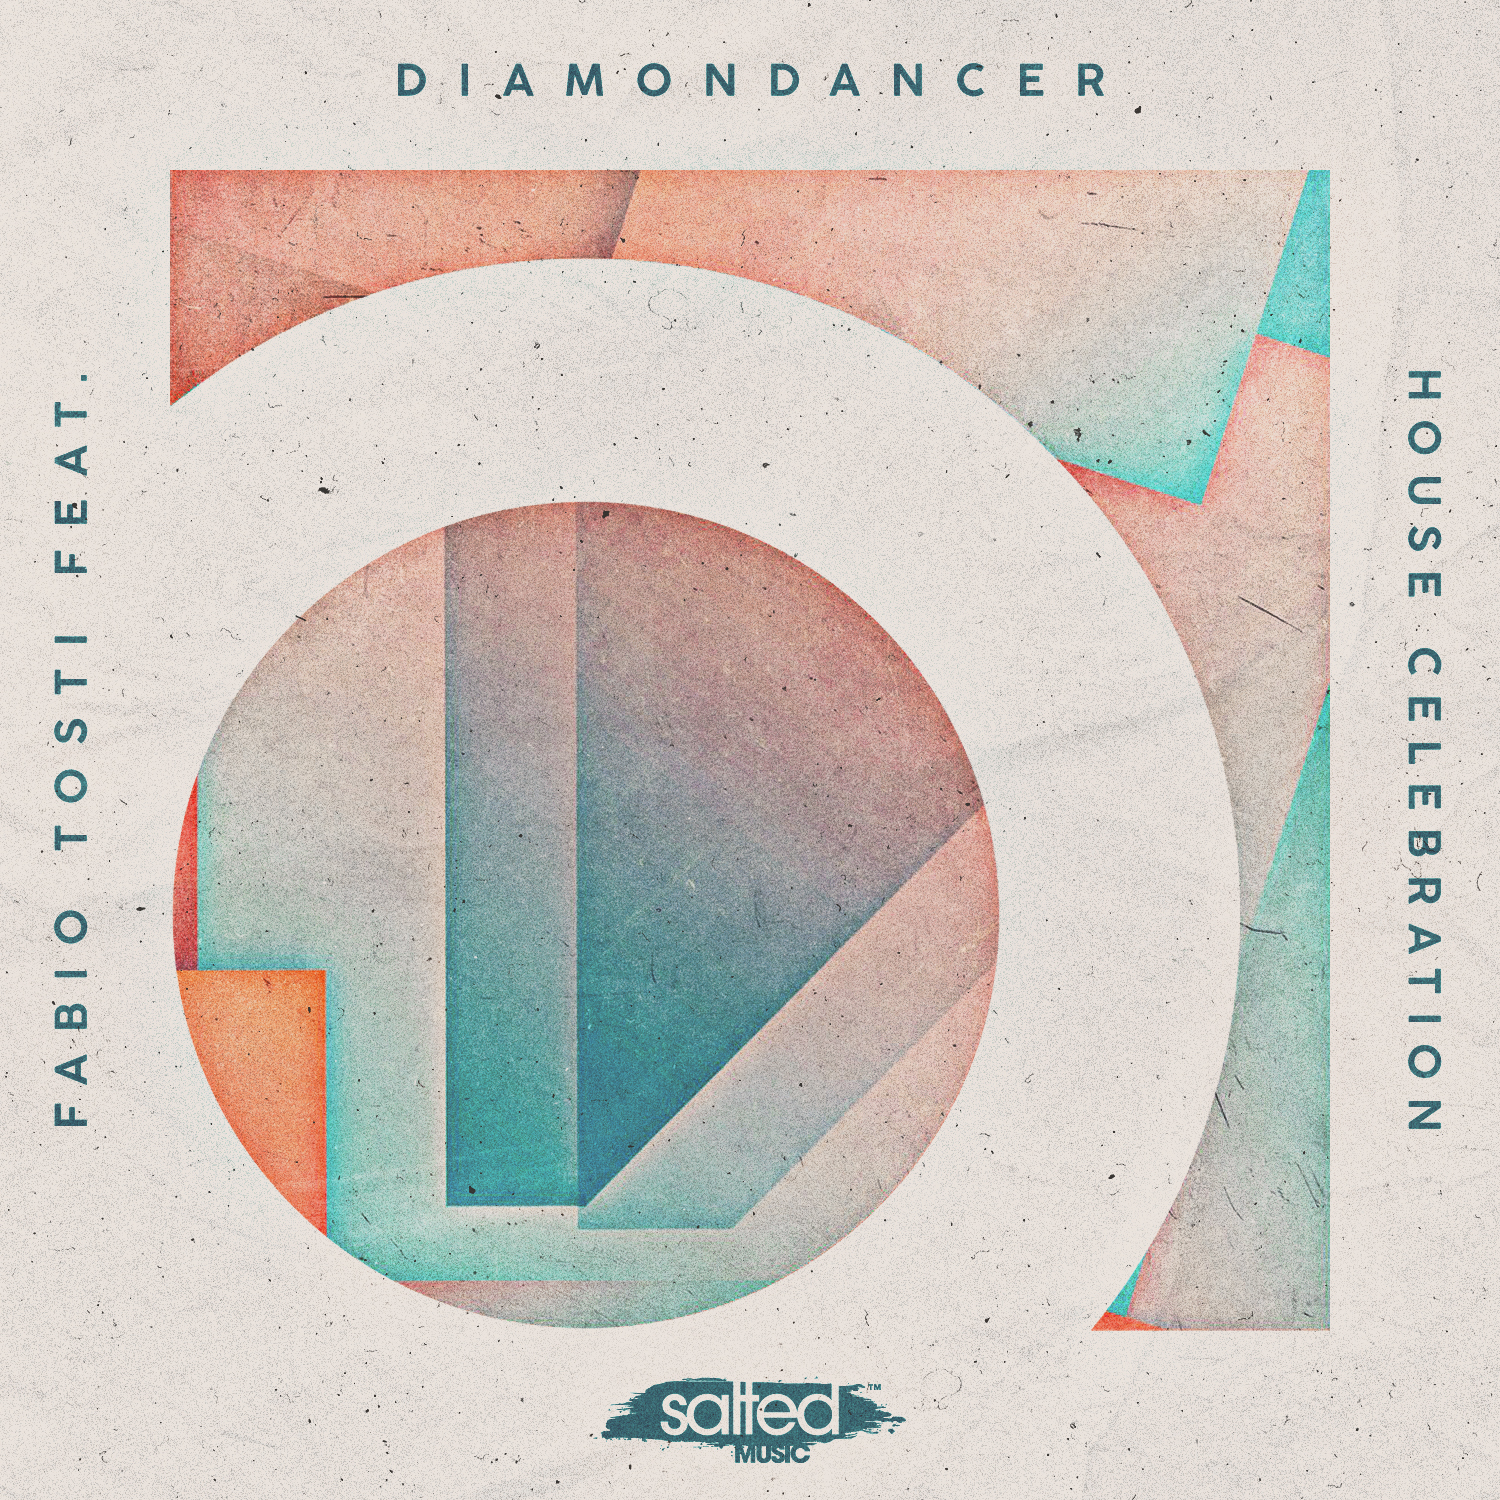 SLT145: House Celebration Fabio Tosti Feat. Diamondancer (Salted Music)